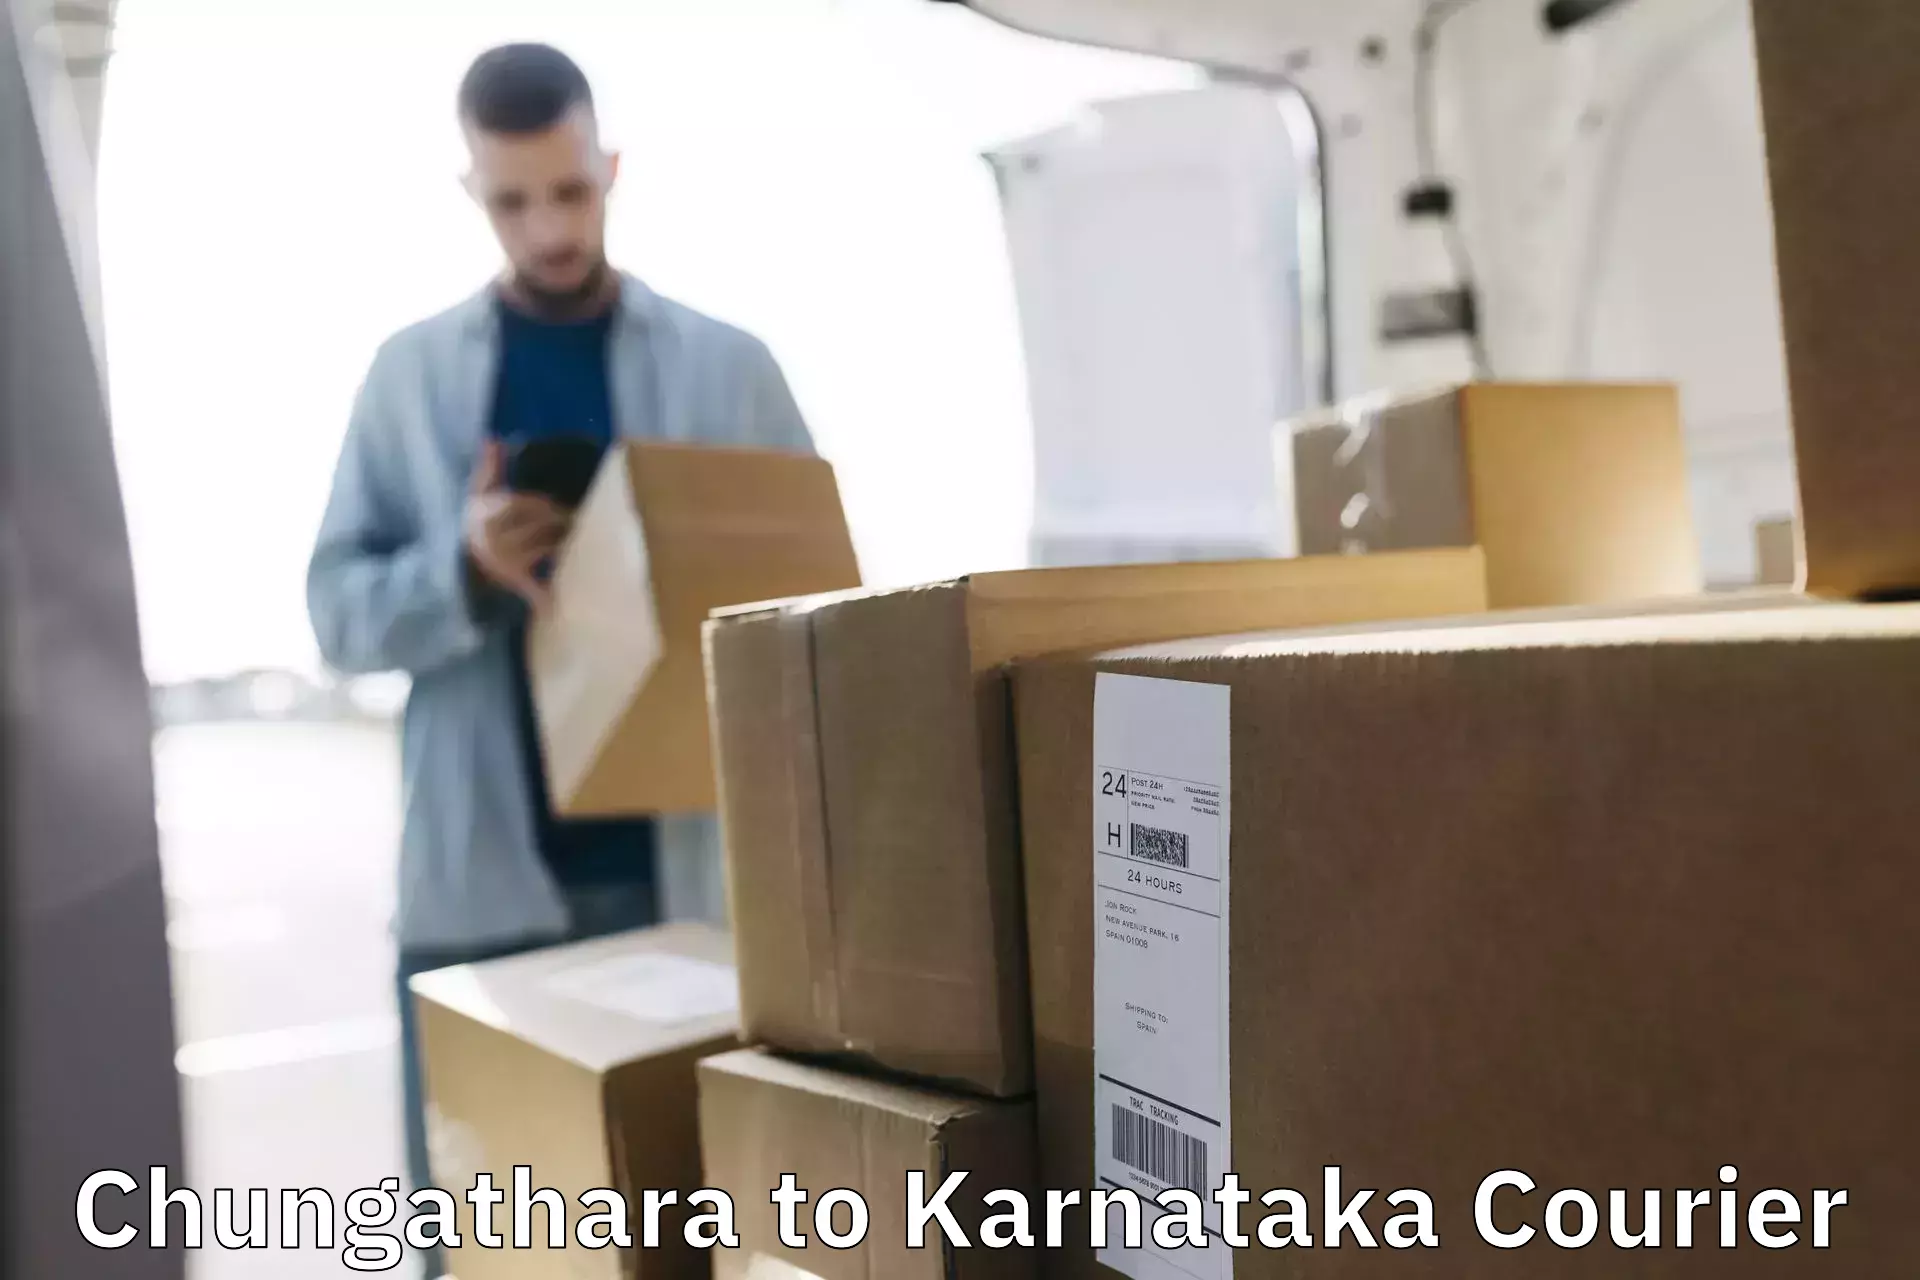 Reliable courier service Chungathara to Basavanagudi